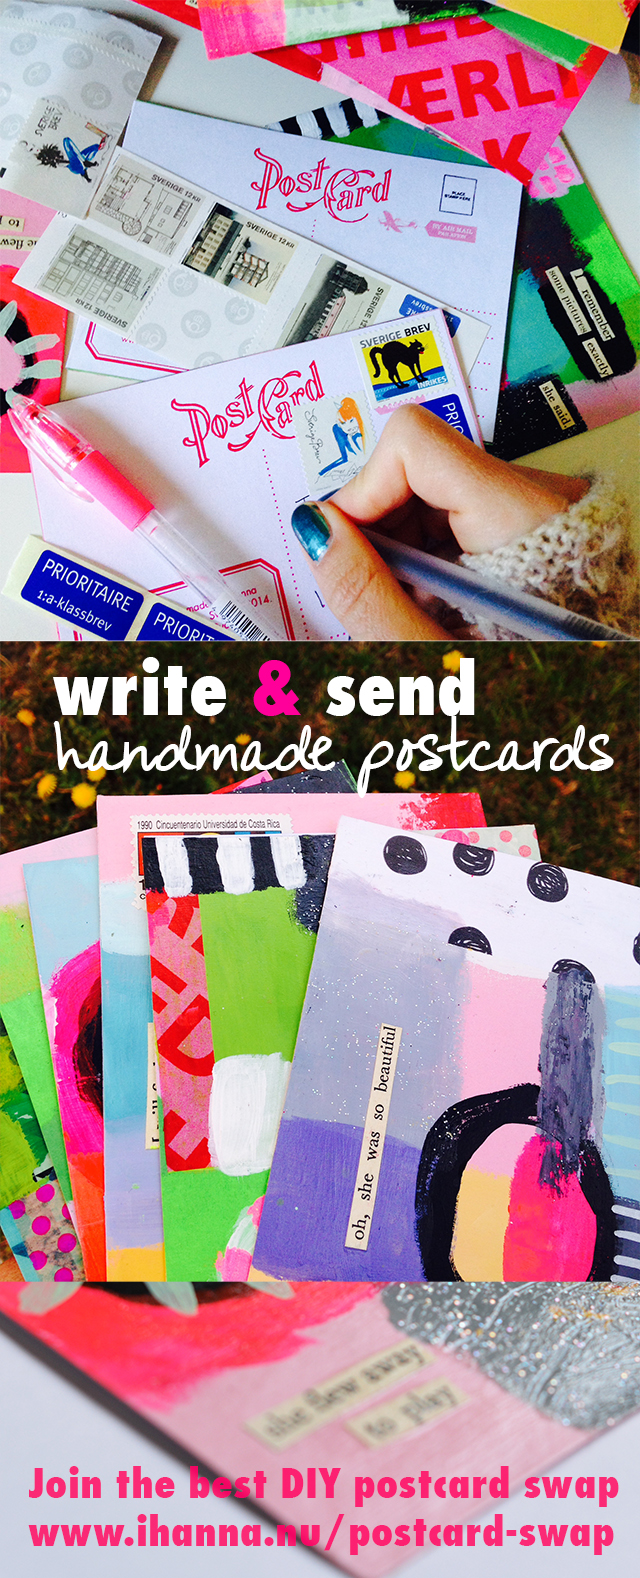 Write and send more handmade postcards - iHanna's swap at www.ihanna.nu/postcard-swap